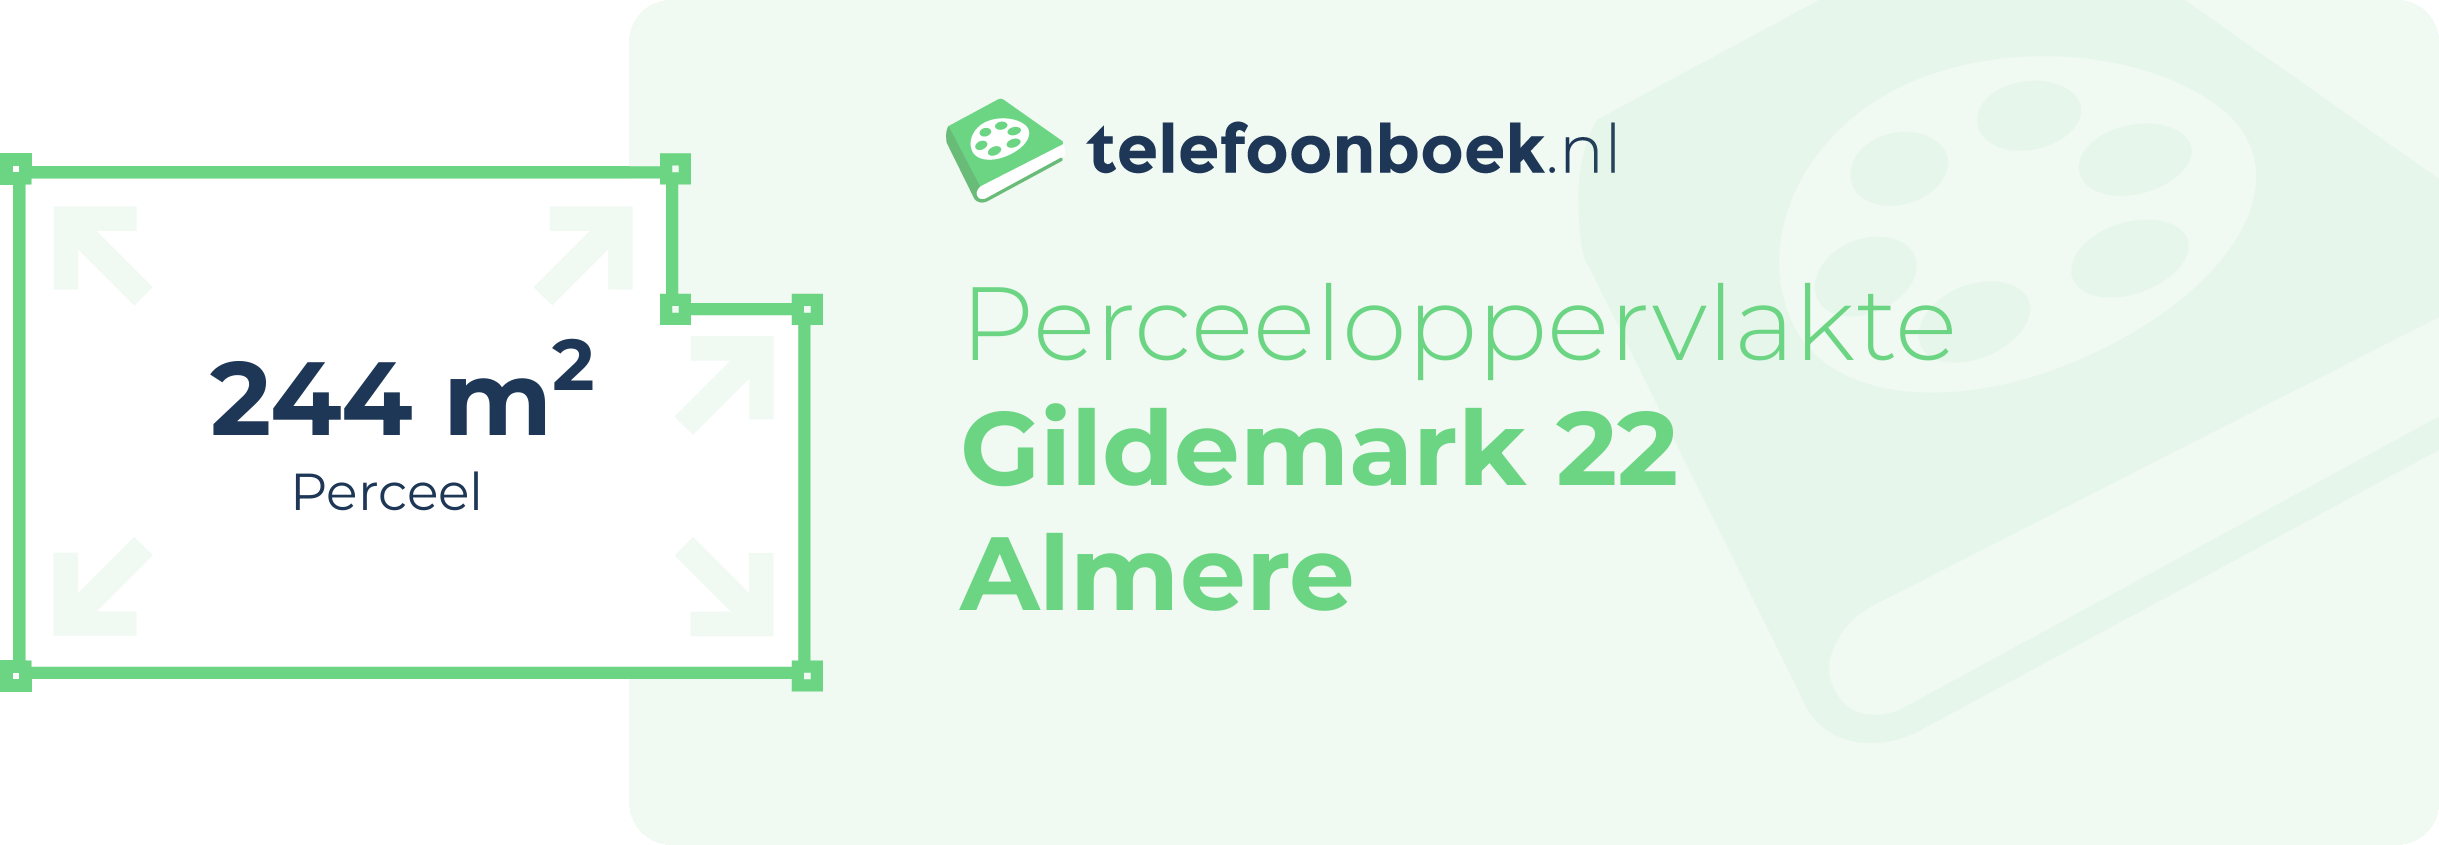 Perceeloppervlakte Gildemark 22 Almere